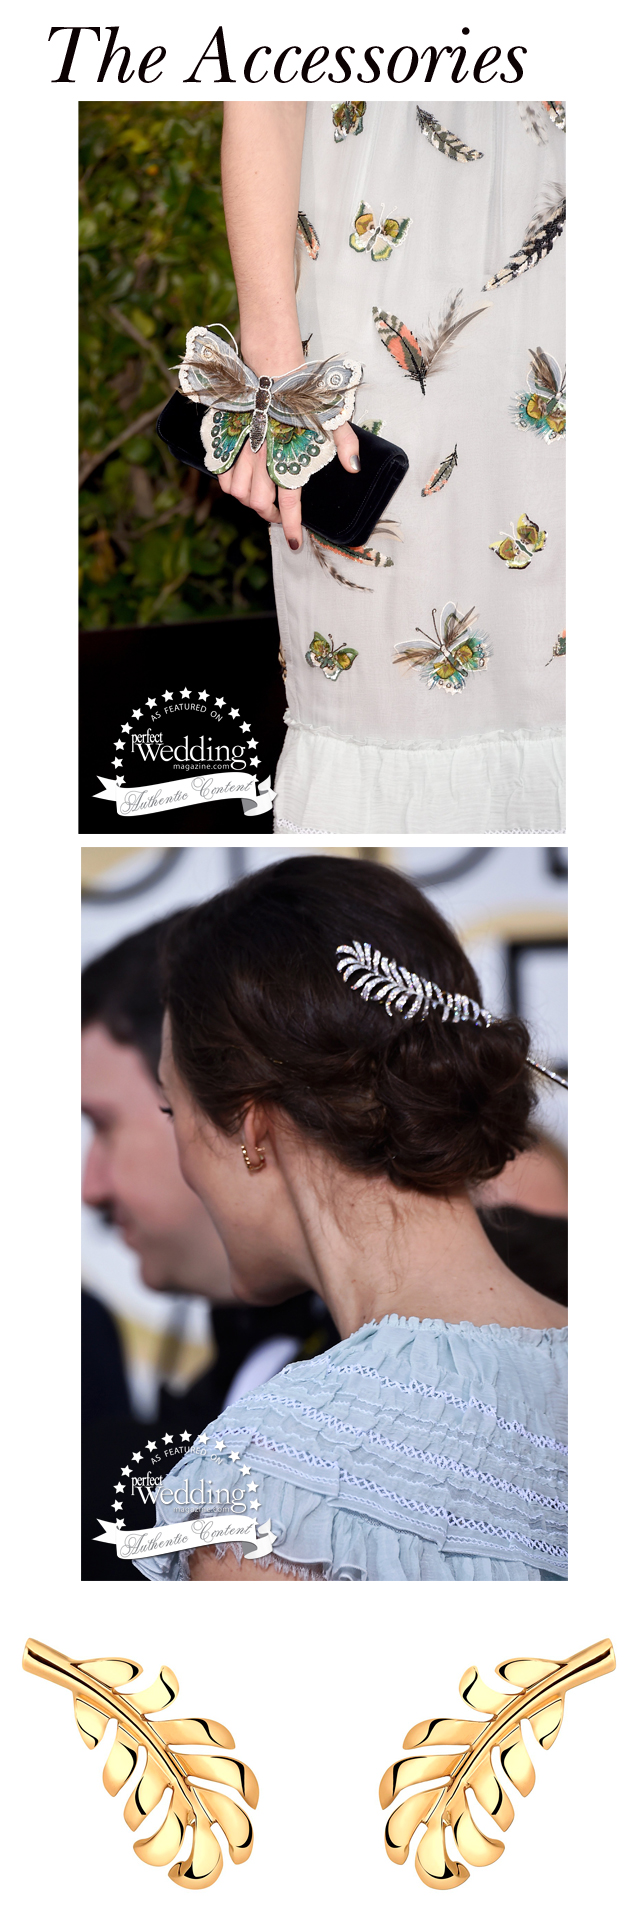 Keira Knightley, Chanel, Chanel Beauty, Perfect Wedding Magazine, Chanel Wedding Inspiration